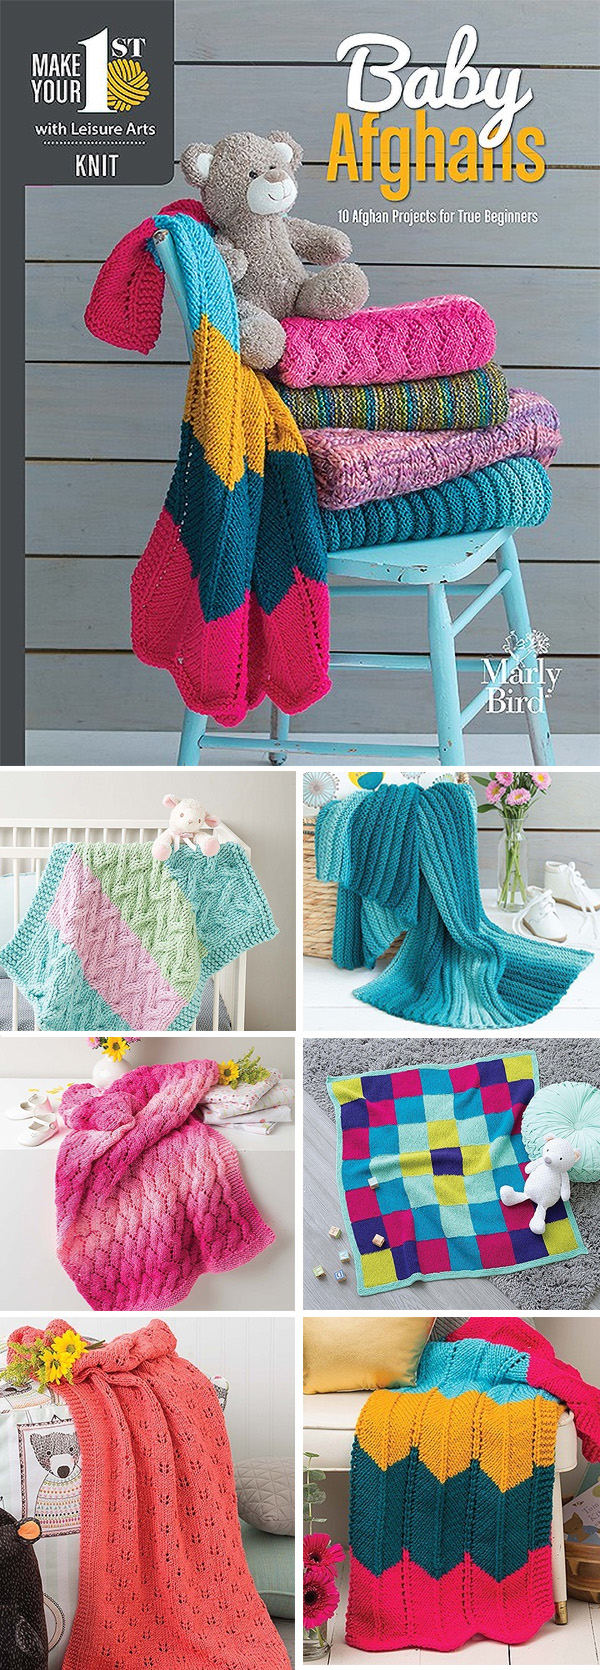 Knitted Baby Afghan Patterns Beginner Easy Ba Blanket Knitting Patterns In The Loop Knitting